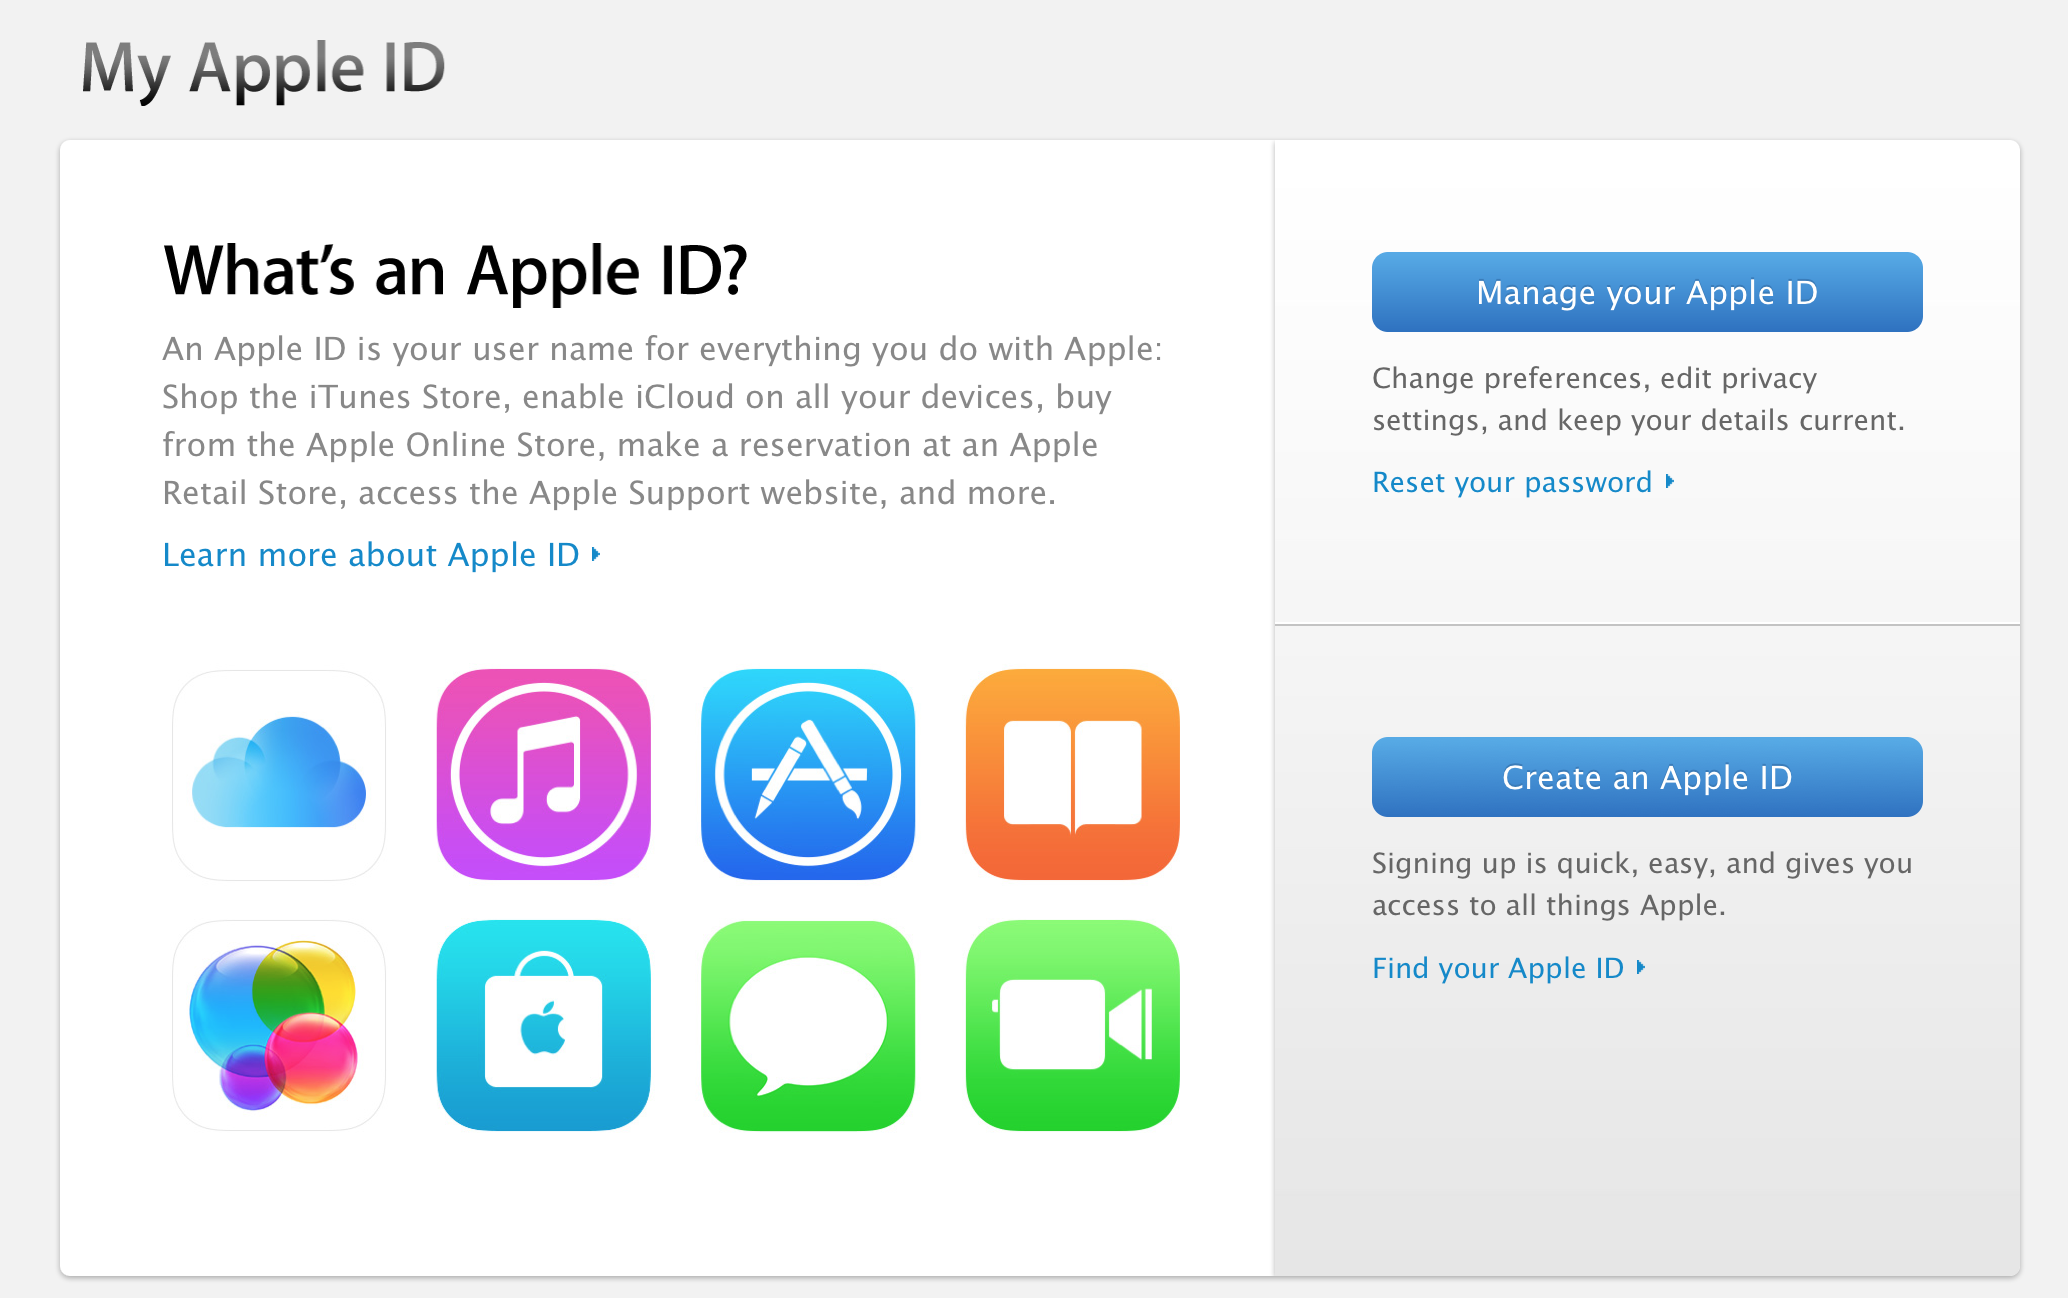 app apple passwords to